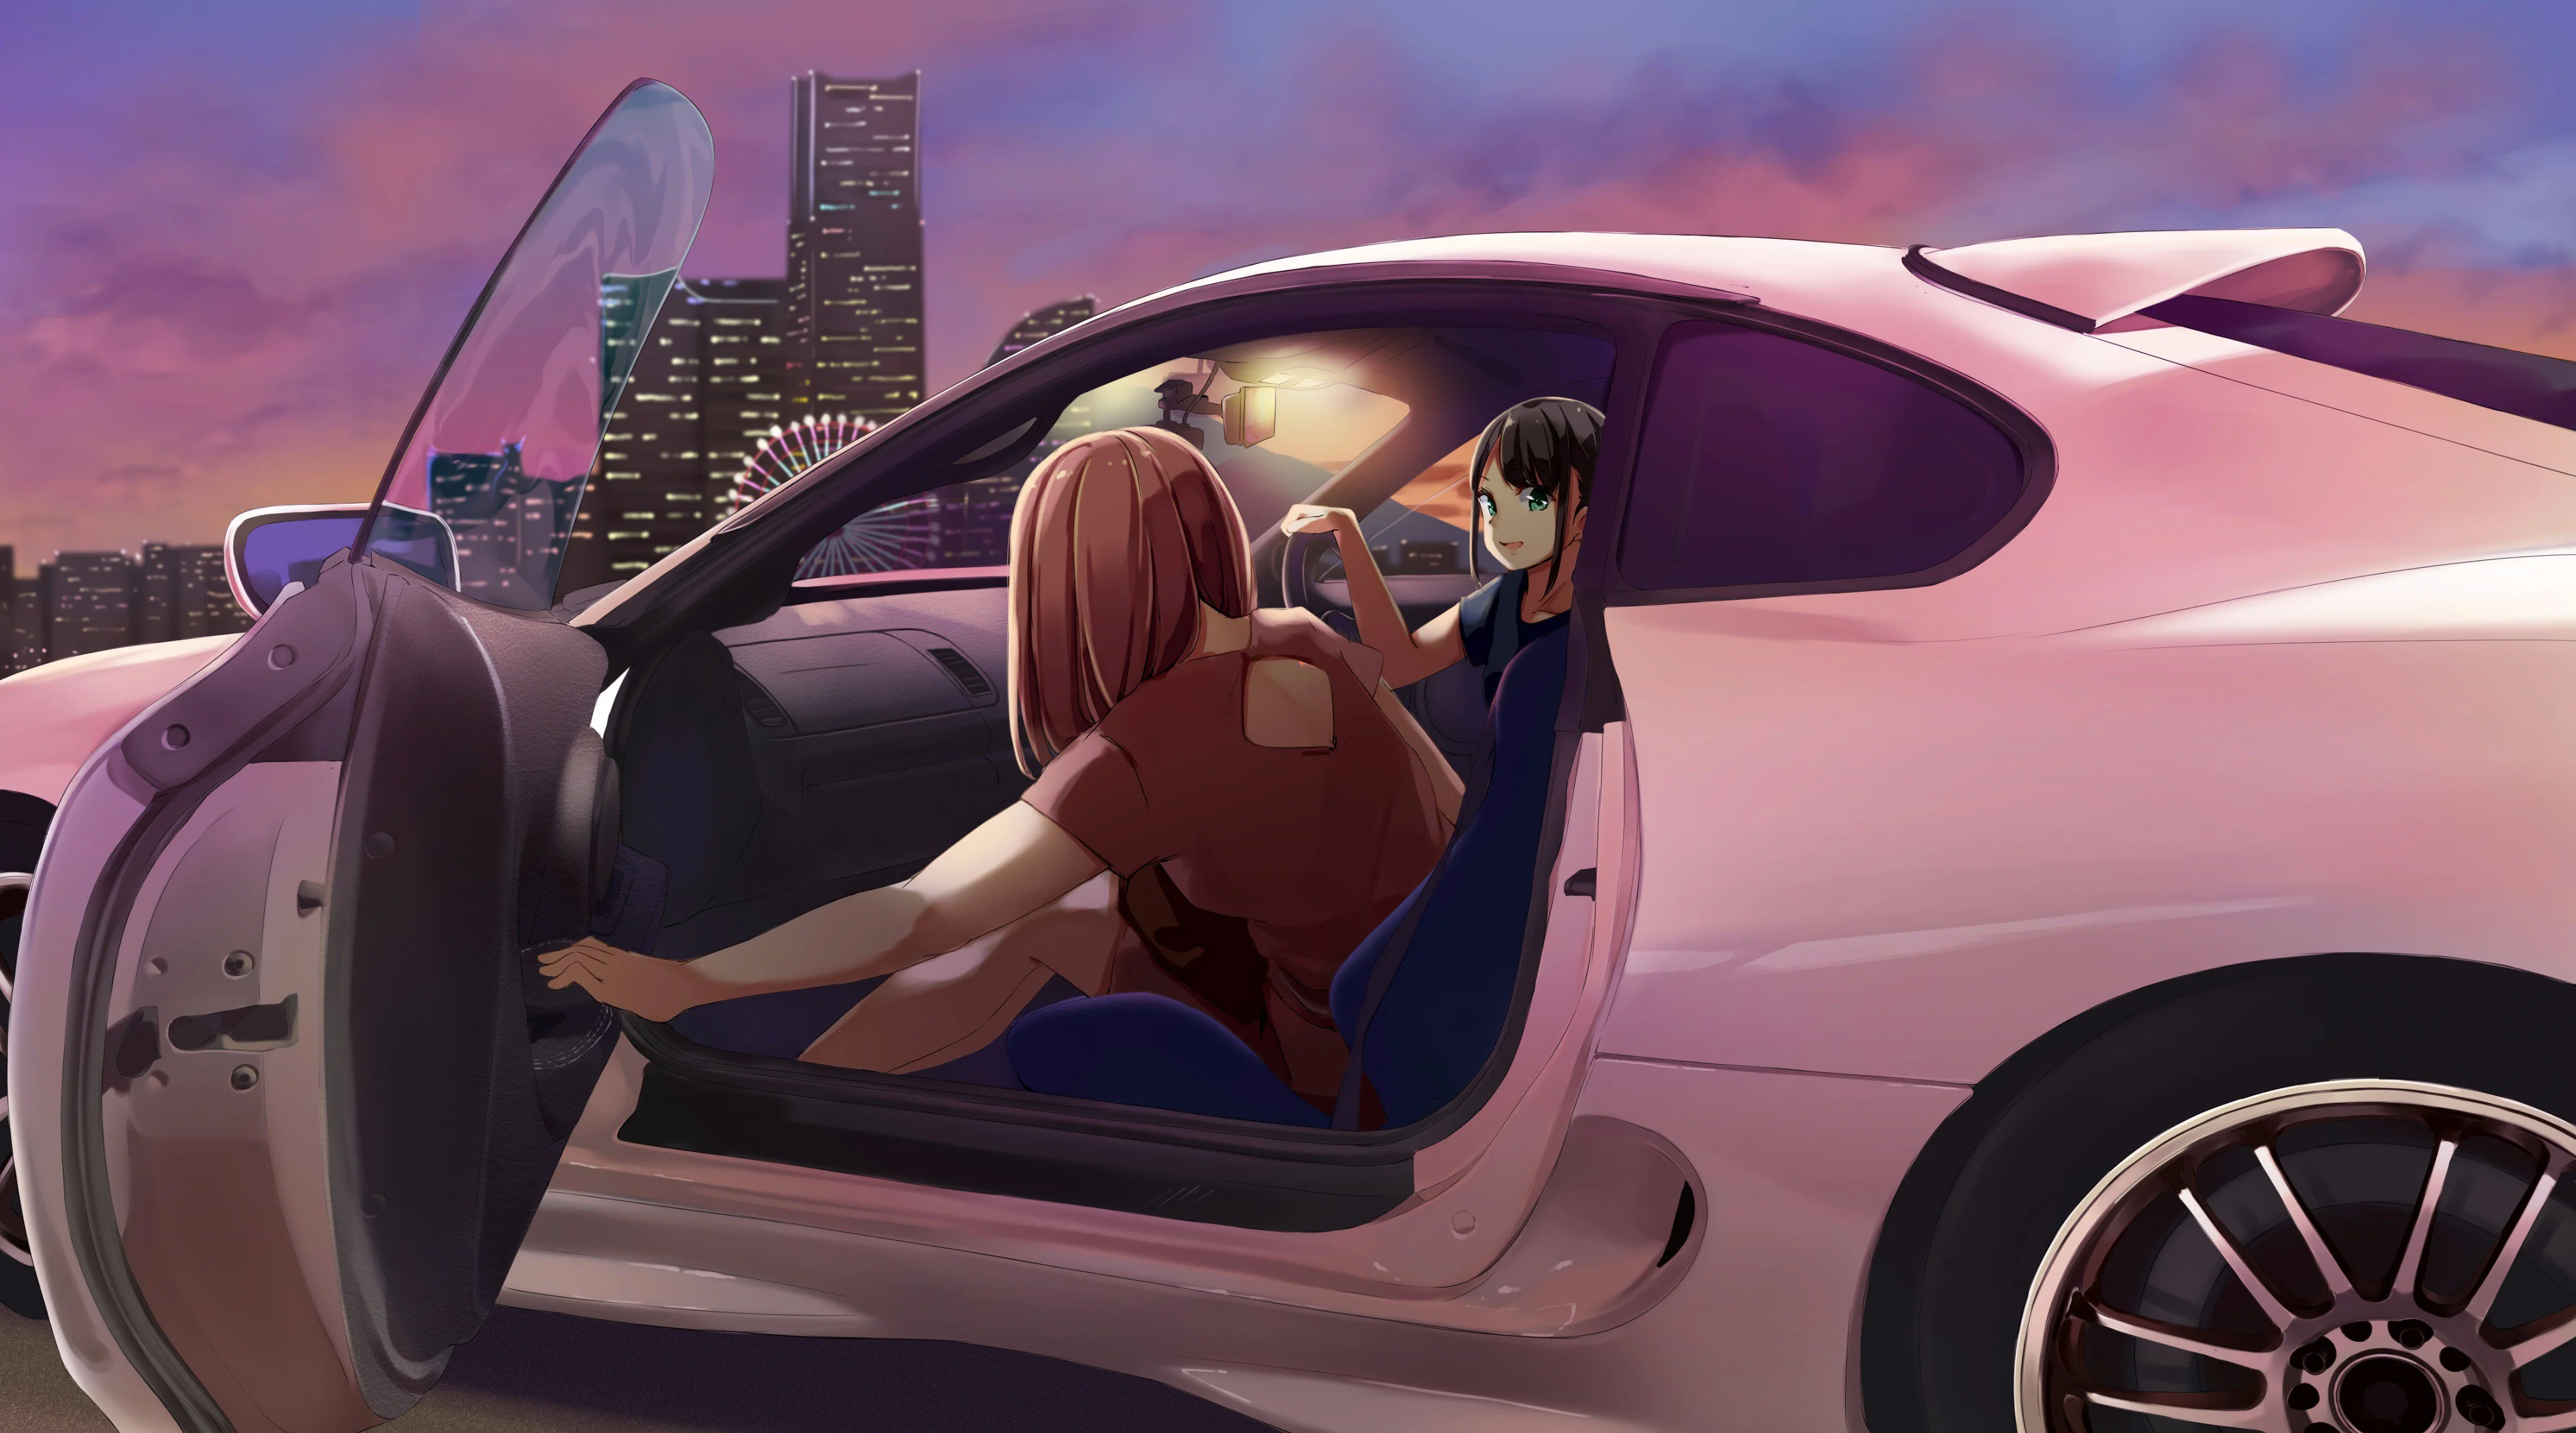 anime girls sitting in car 1696976526